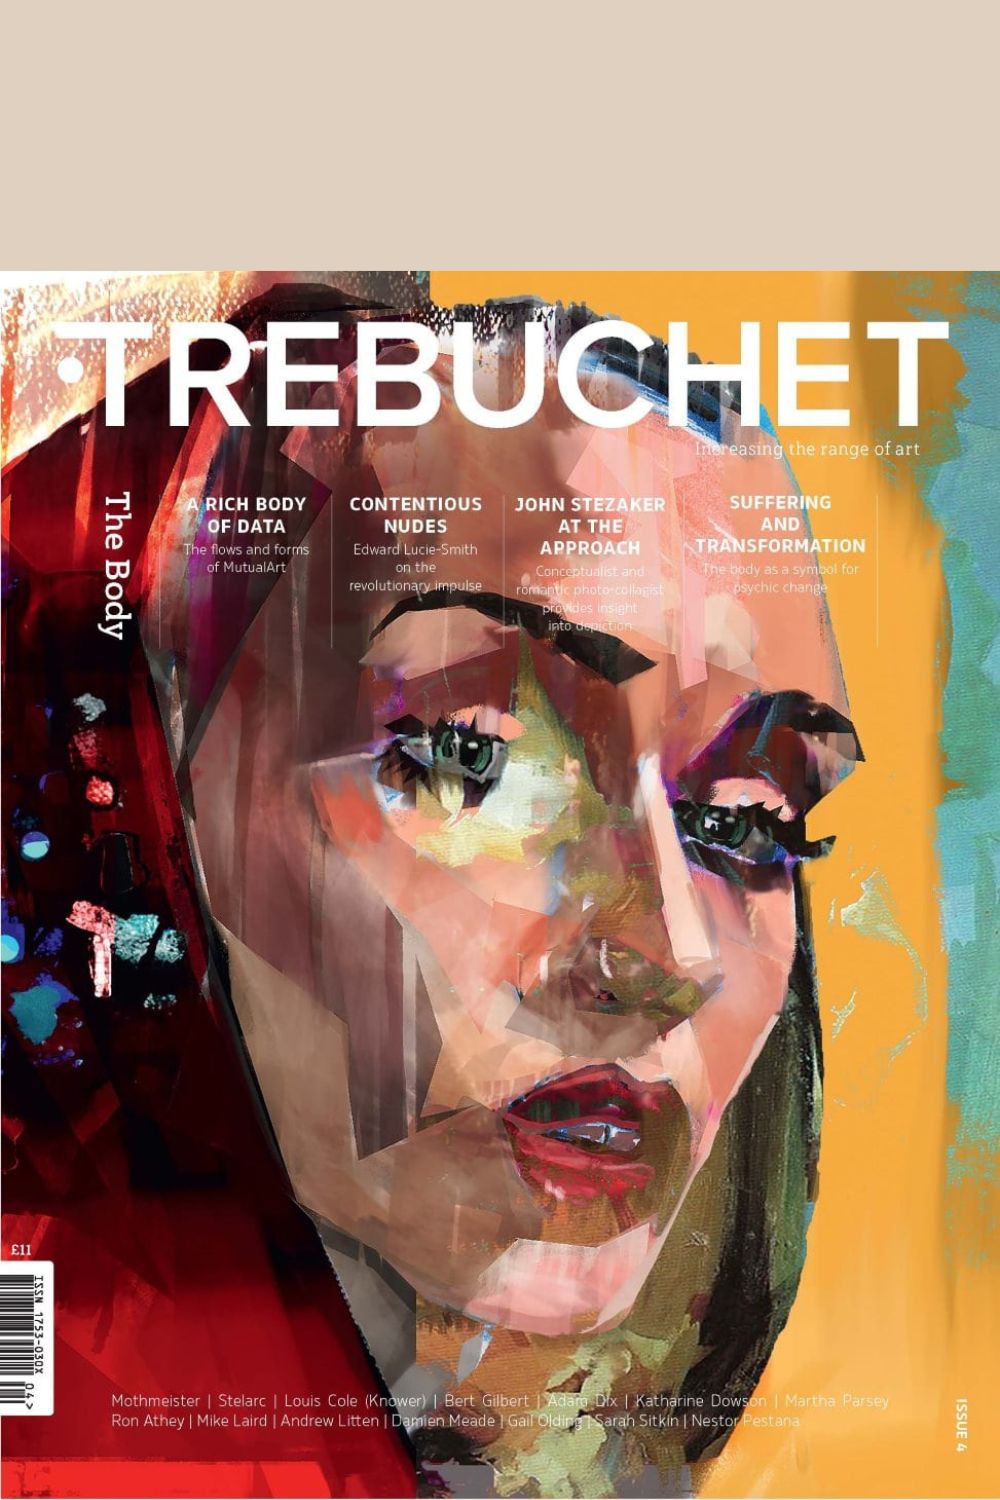 Trebuchet Issue 4: The Body cover